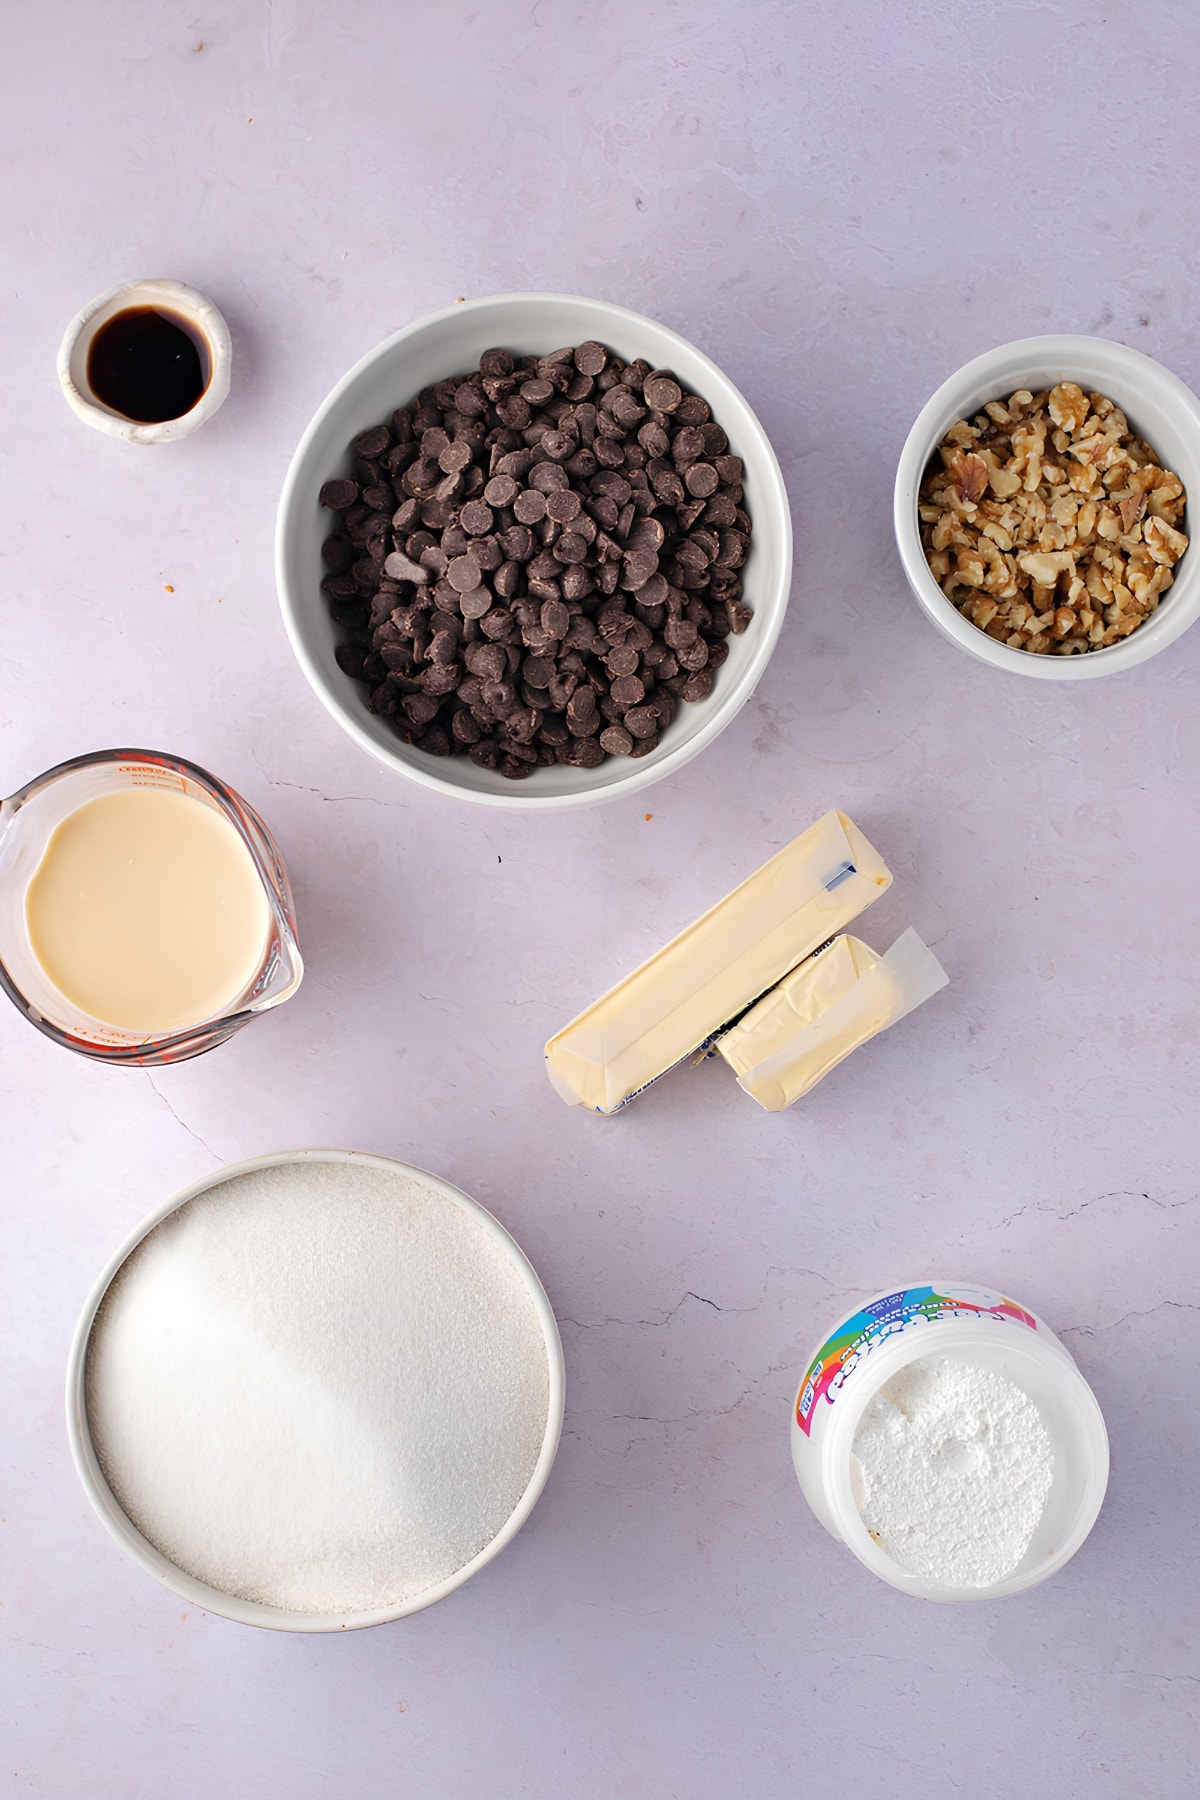 Fantasy Fudge Ingredients - White Sugar, Margarine, Milk, Chocolate Chips, Marshmallow Cream, Chopped Walnuts, and Vanilla Extract